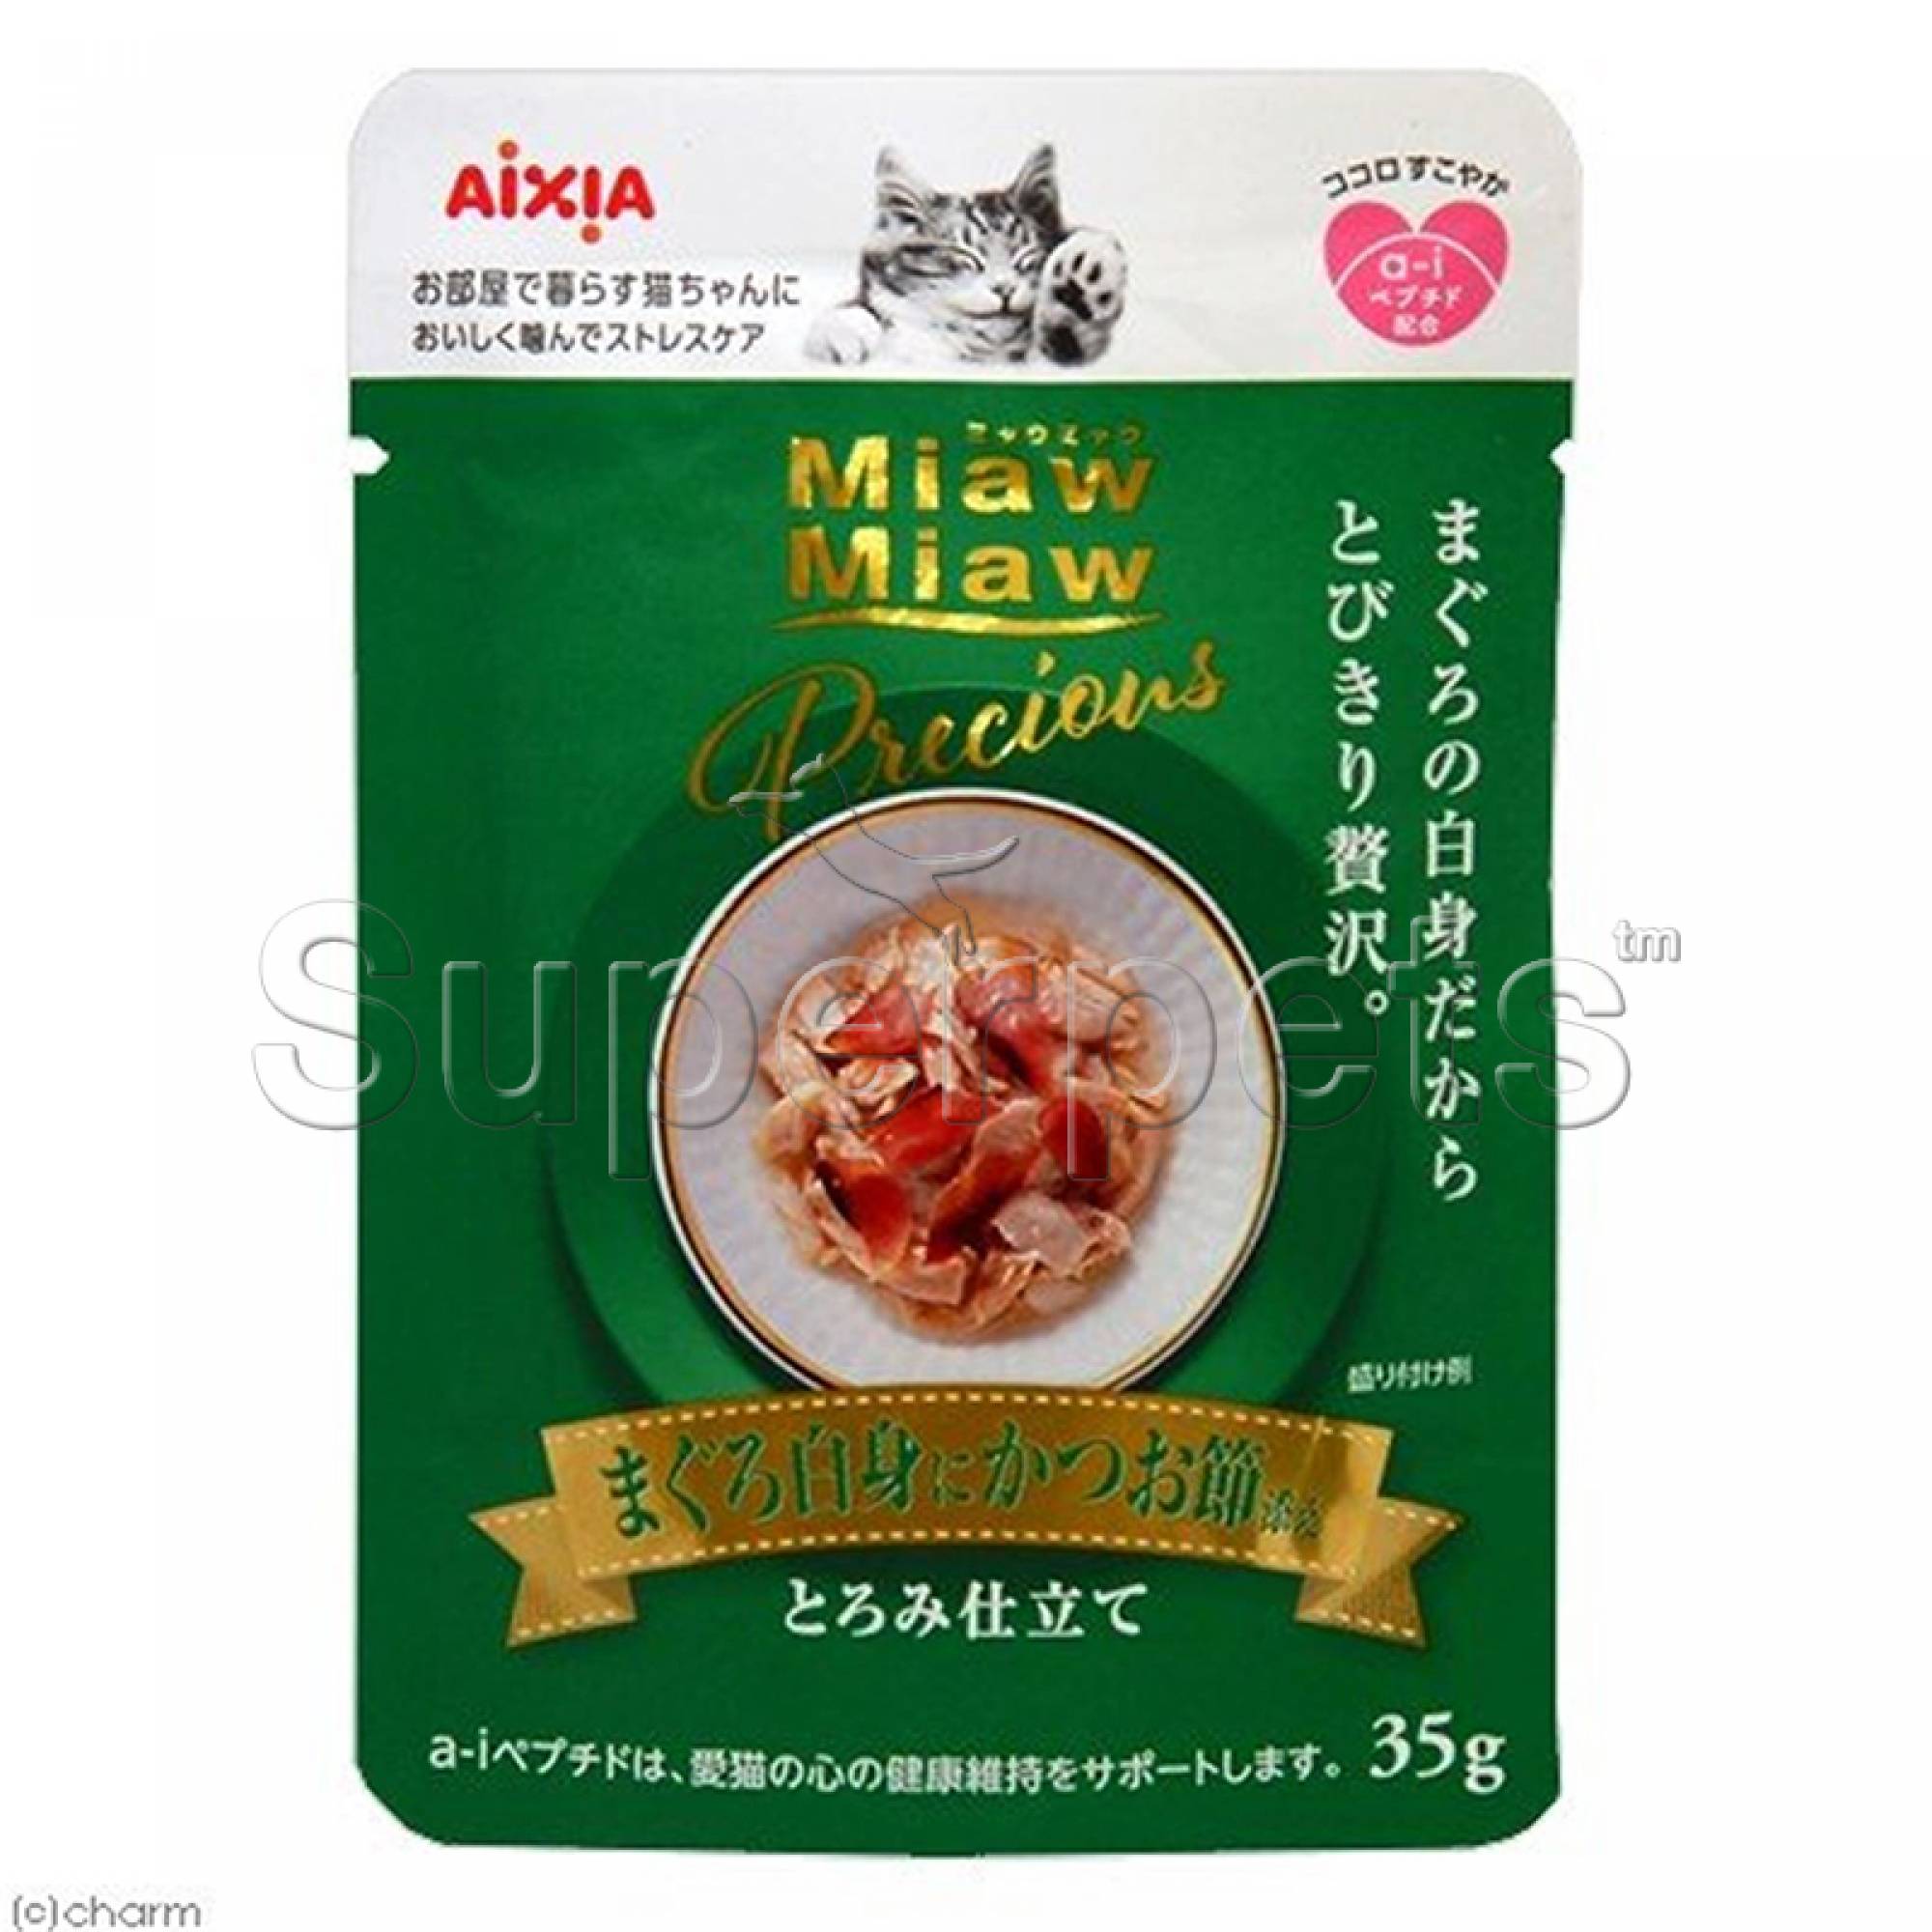 Aixia Miaw Miaw Precious Cat Treats - MPR4 Tuna with Skipjack 35g